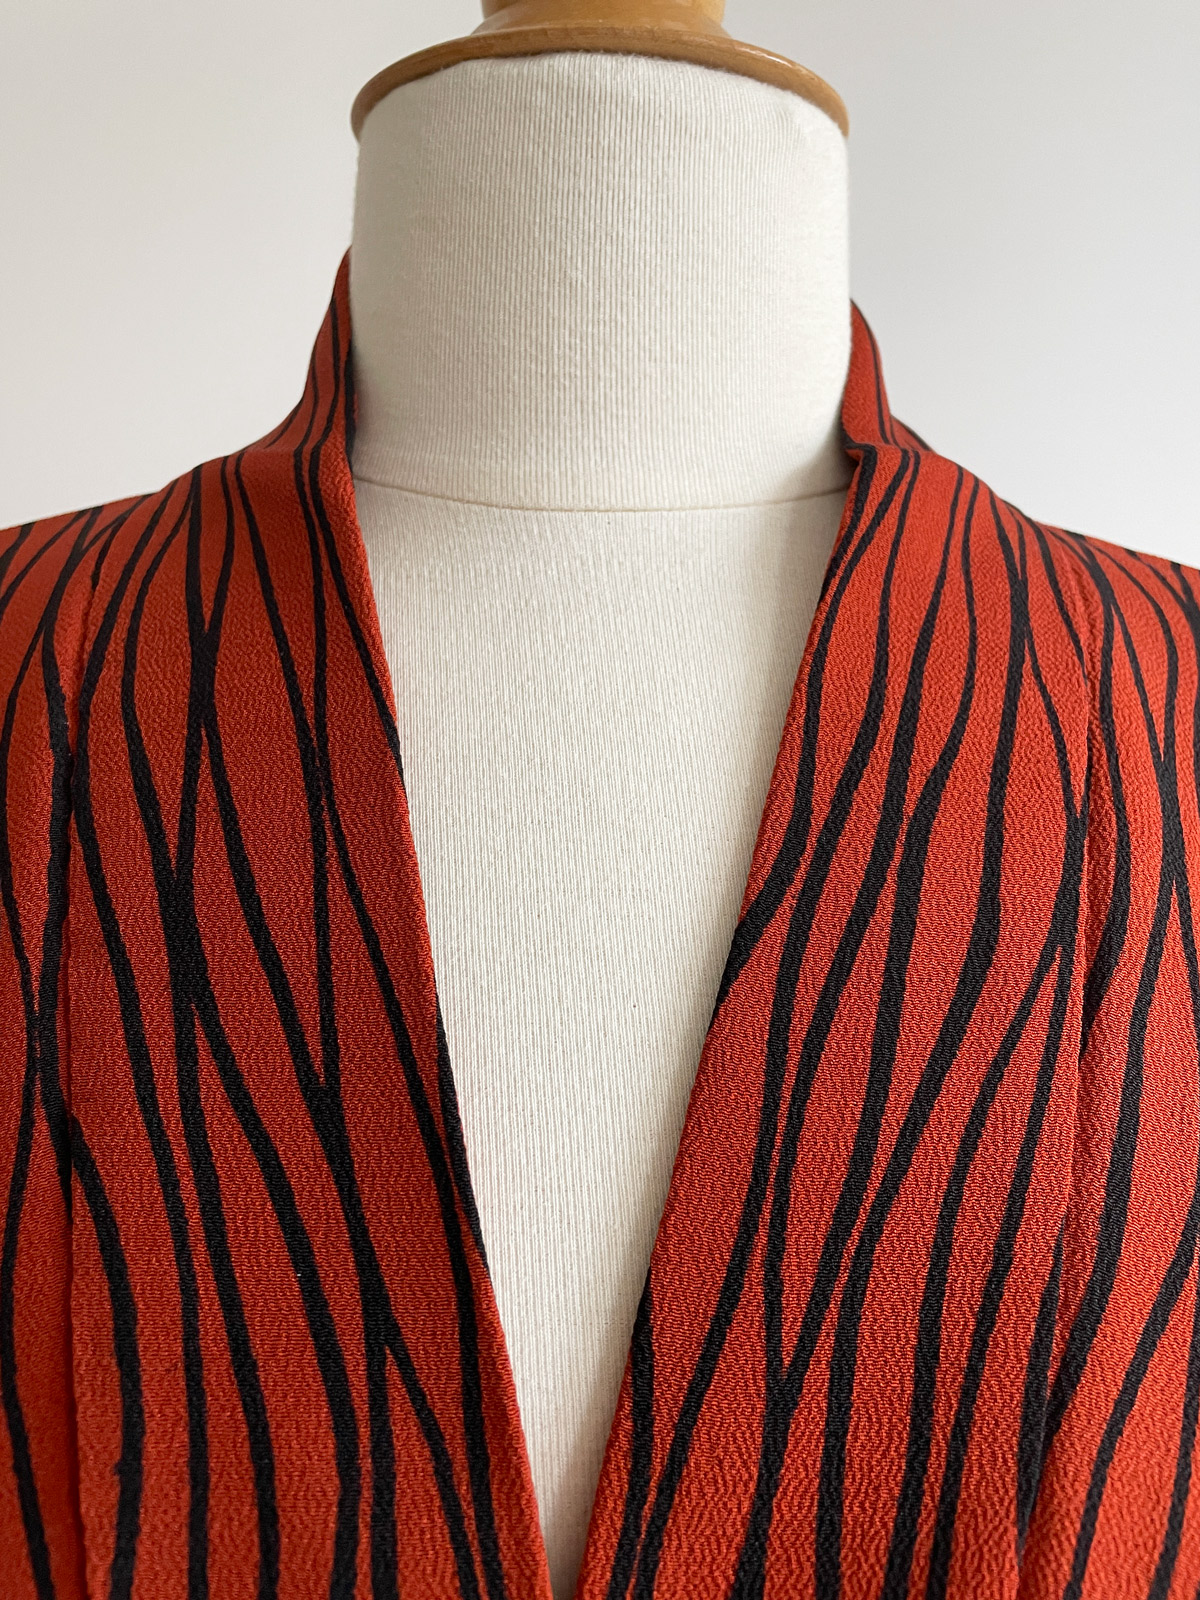 Akiko – rusty red Kimono jacket with graphic line pattern